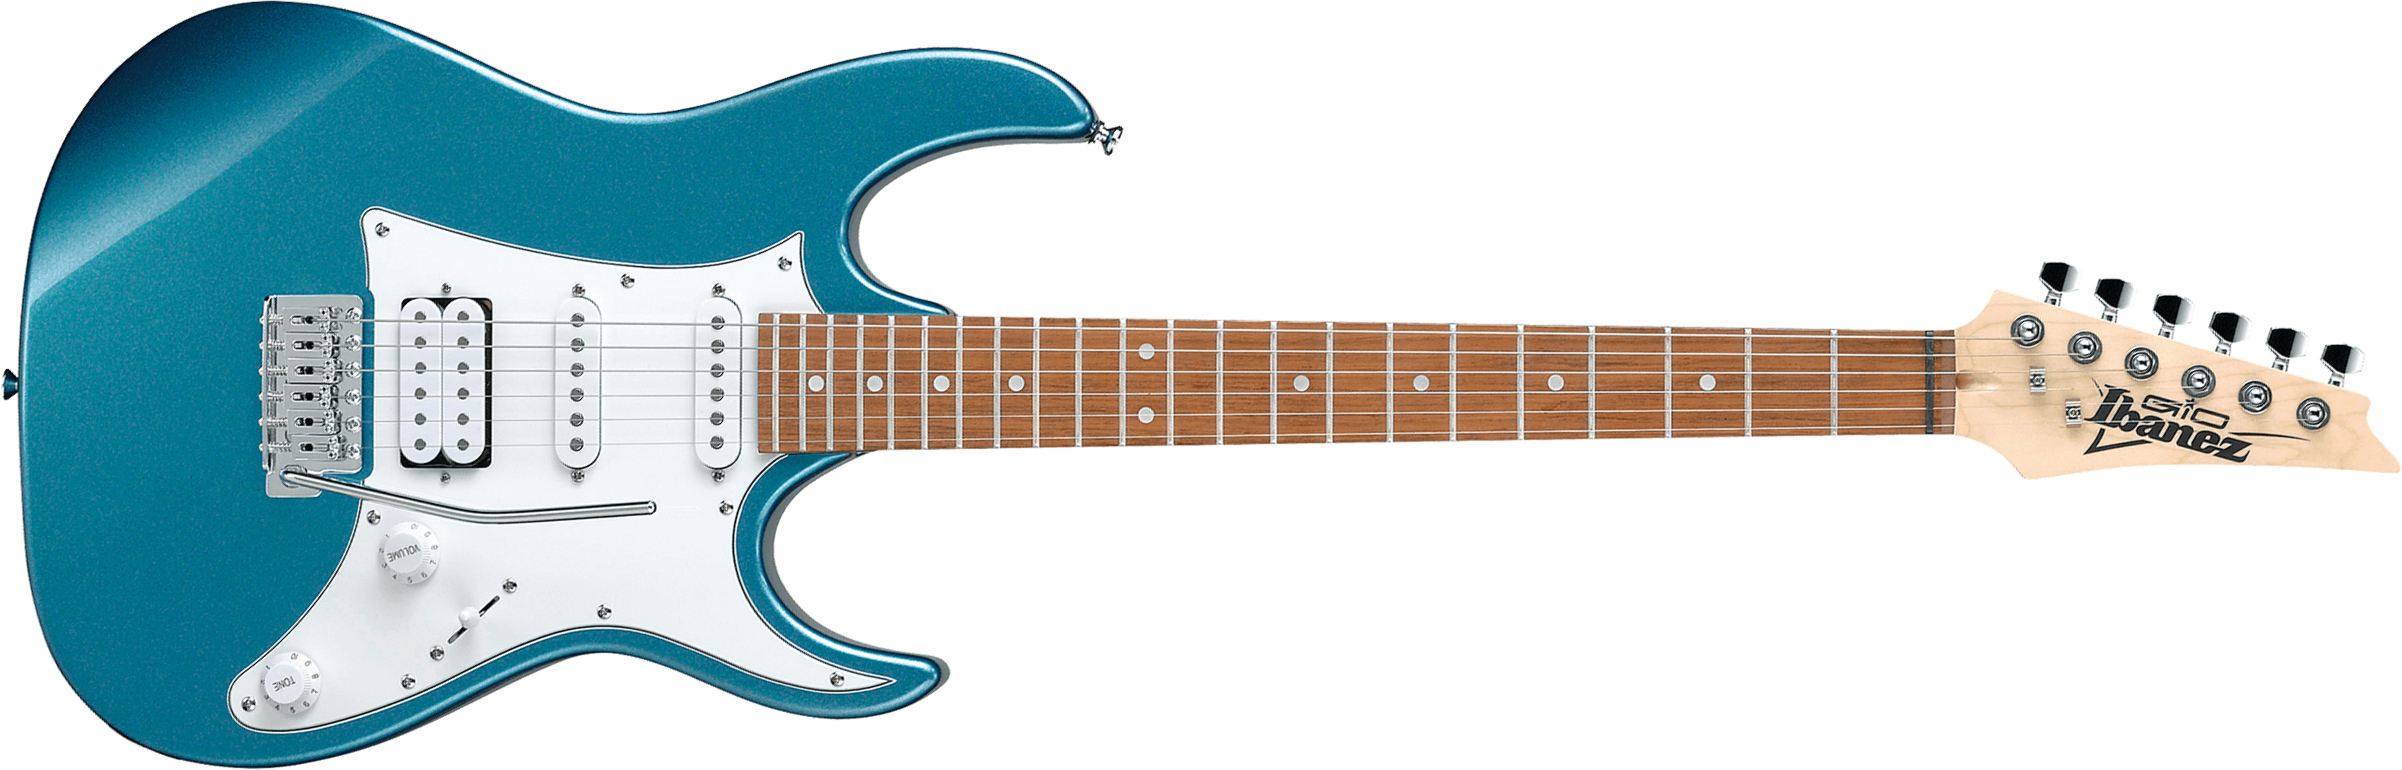 Ibanez Grx40 Mlb Gio Hss Trem Jat - Metallic Light Blue - Guitarra eléctrica con forma de str. - Main picture